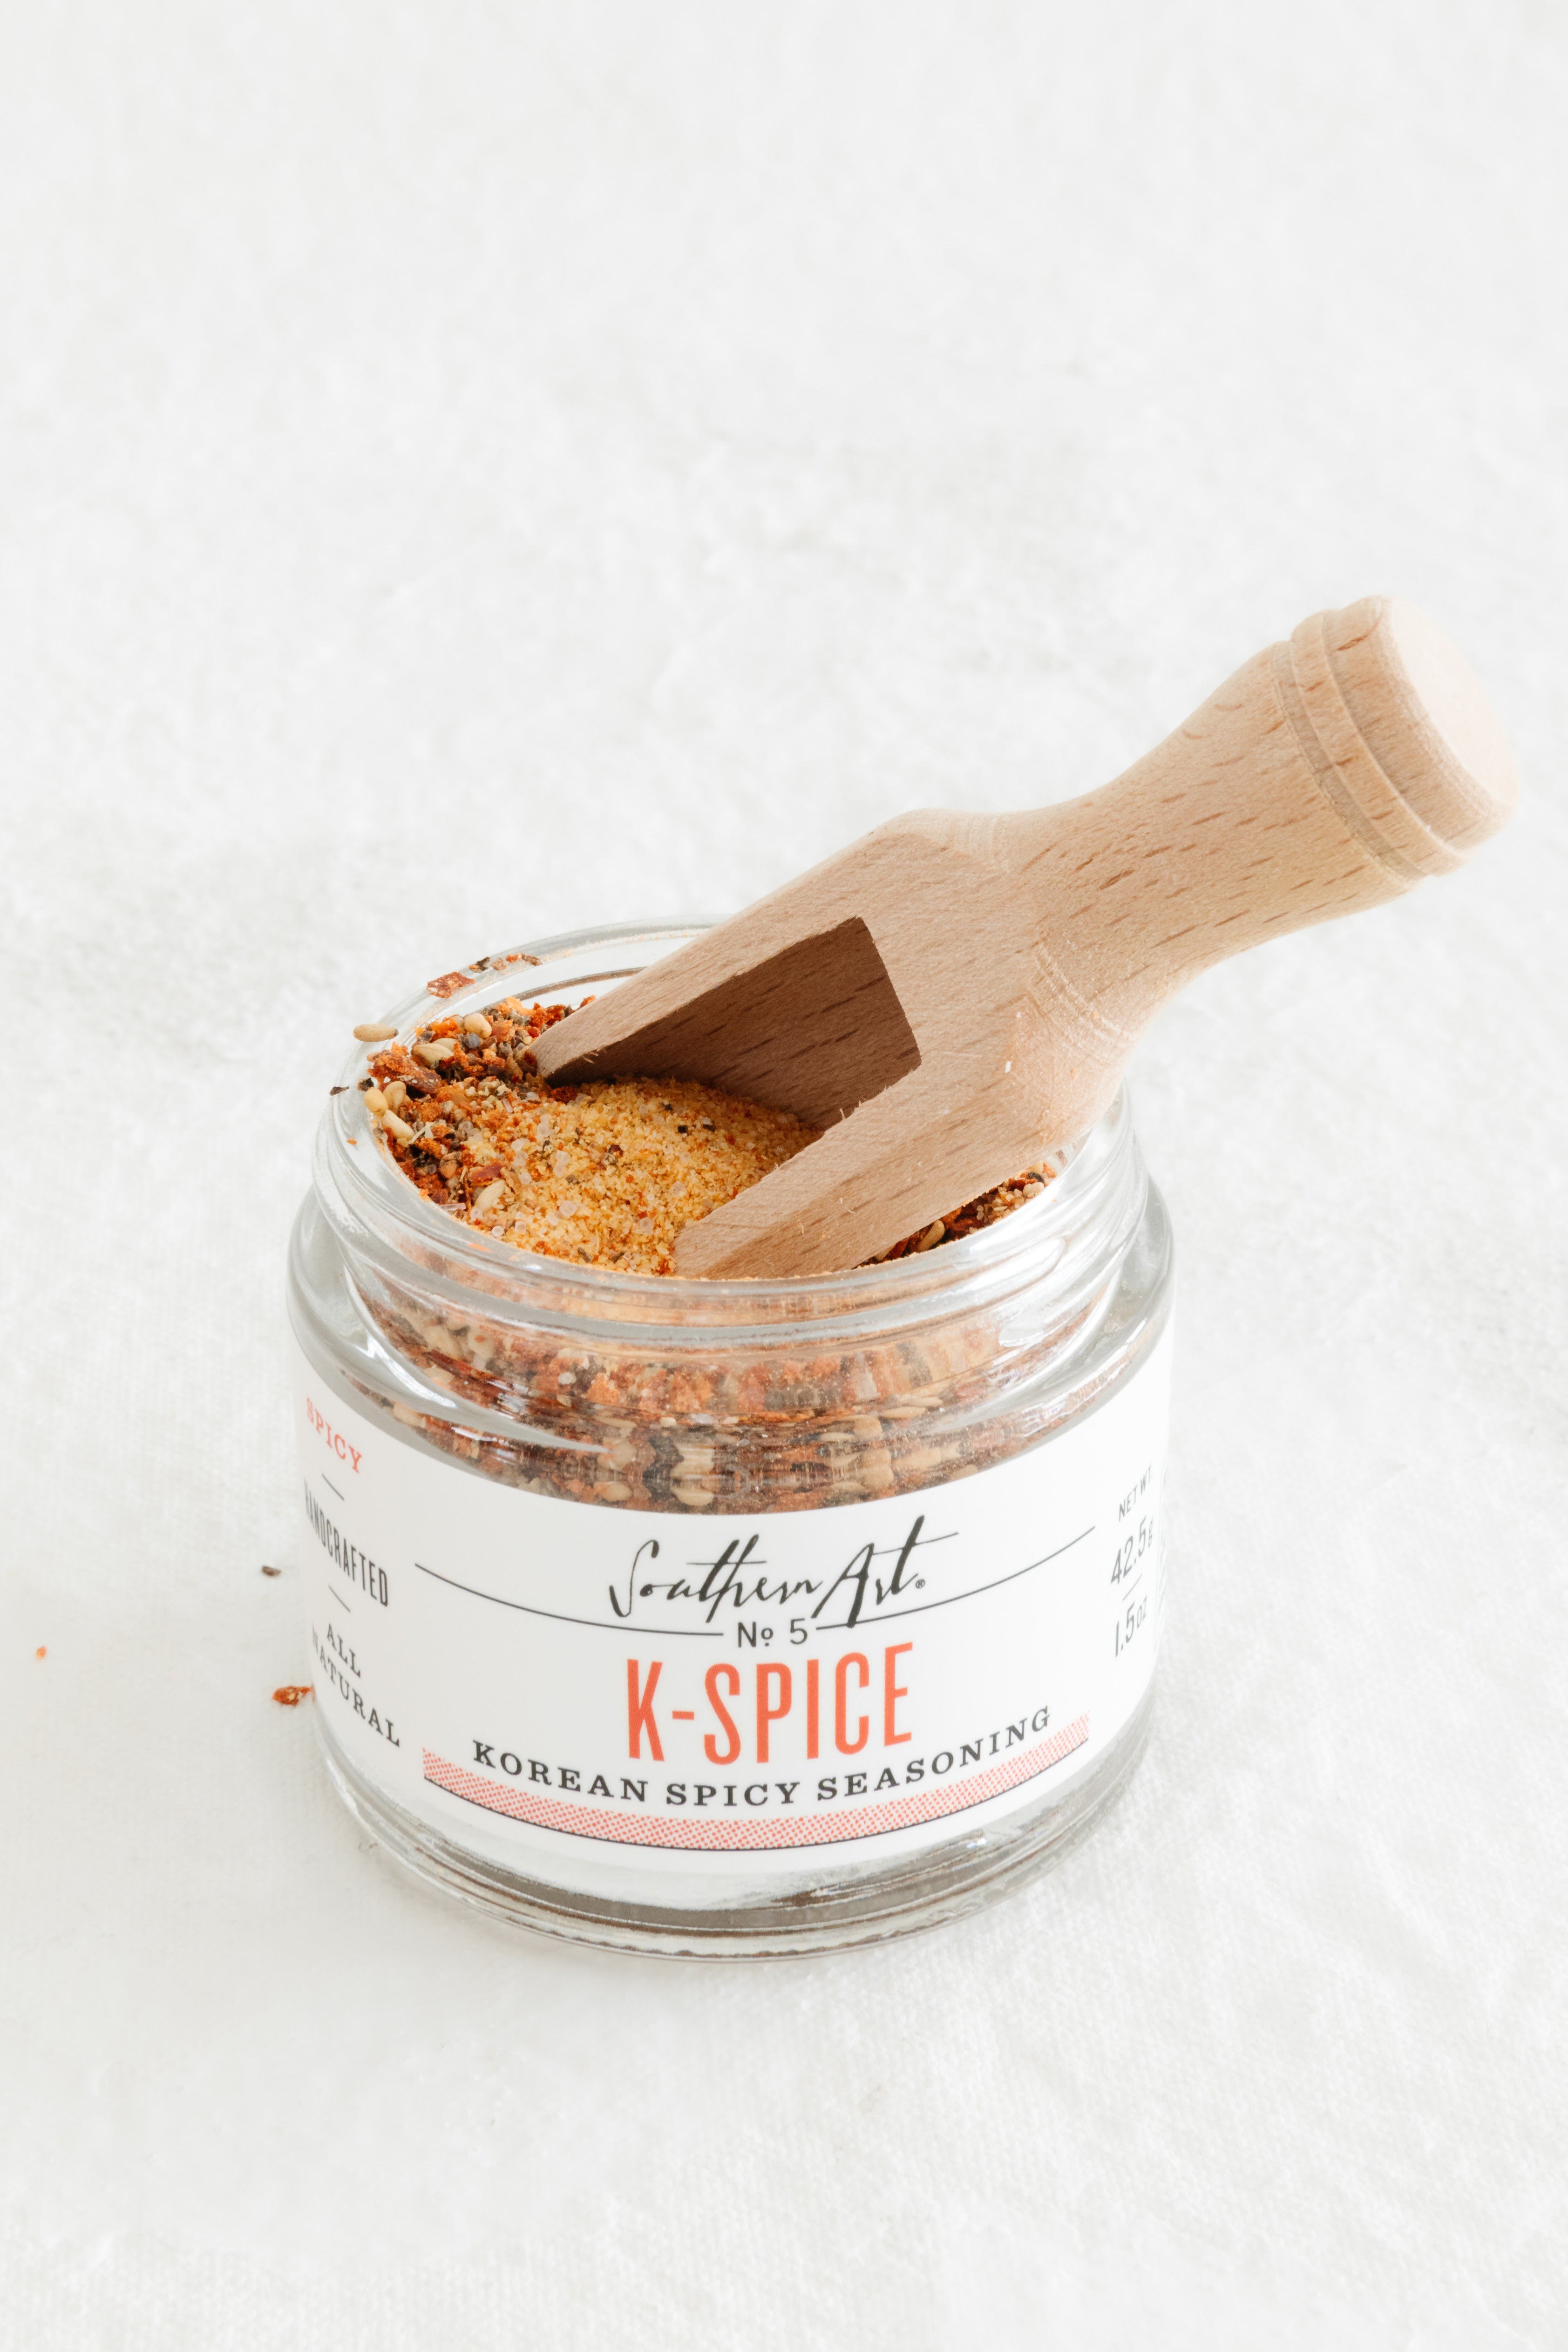 K-Spice Seasoning